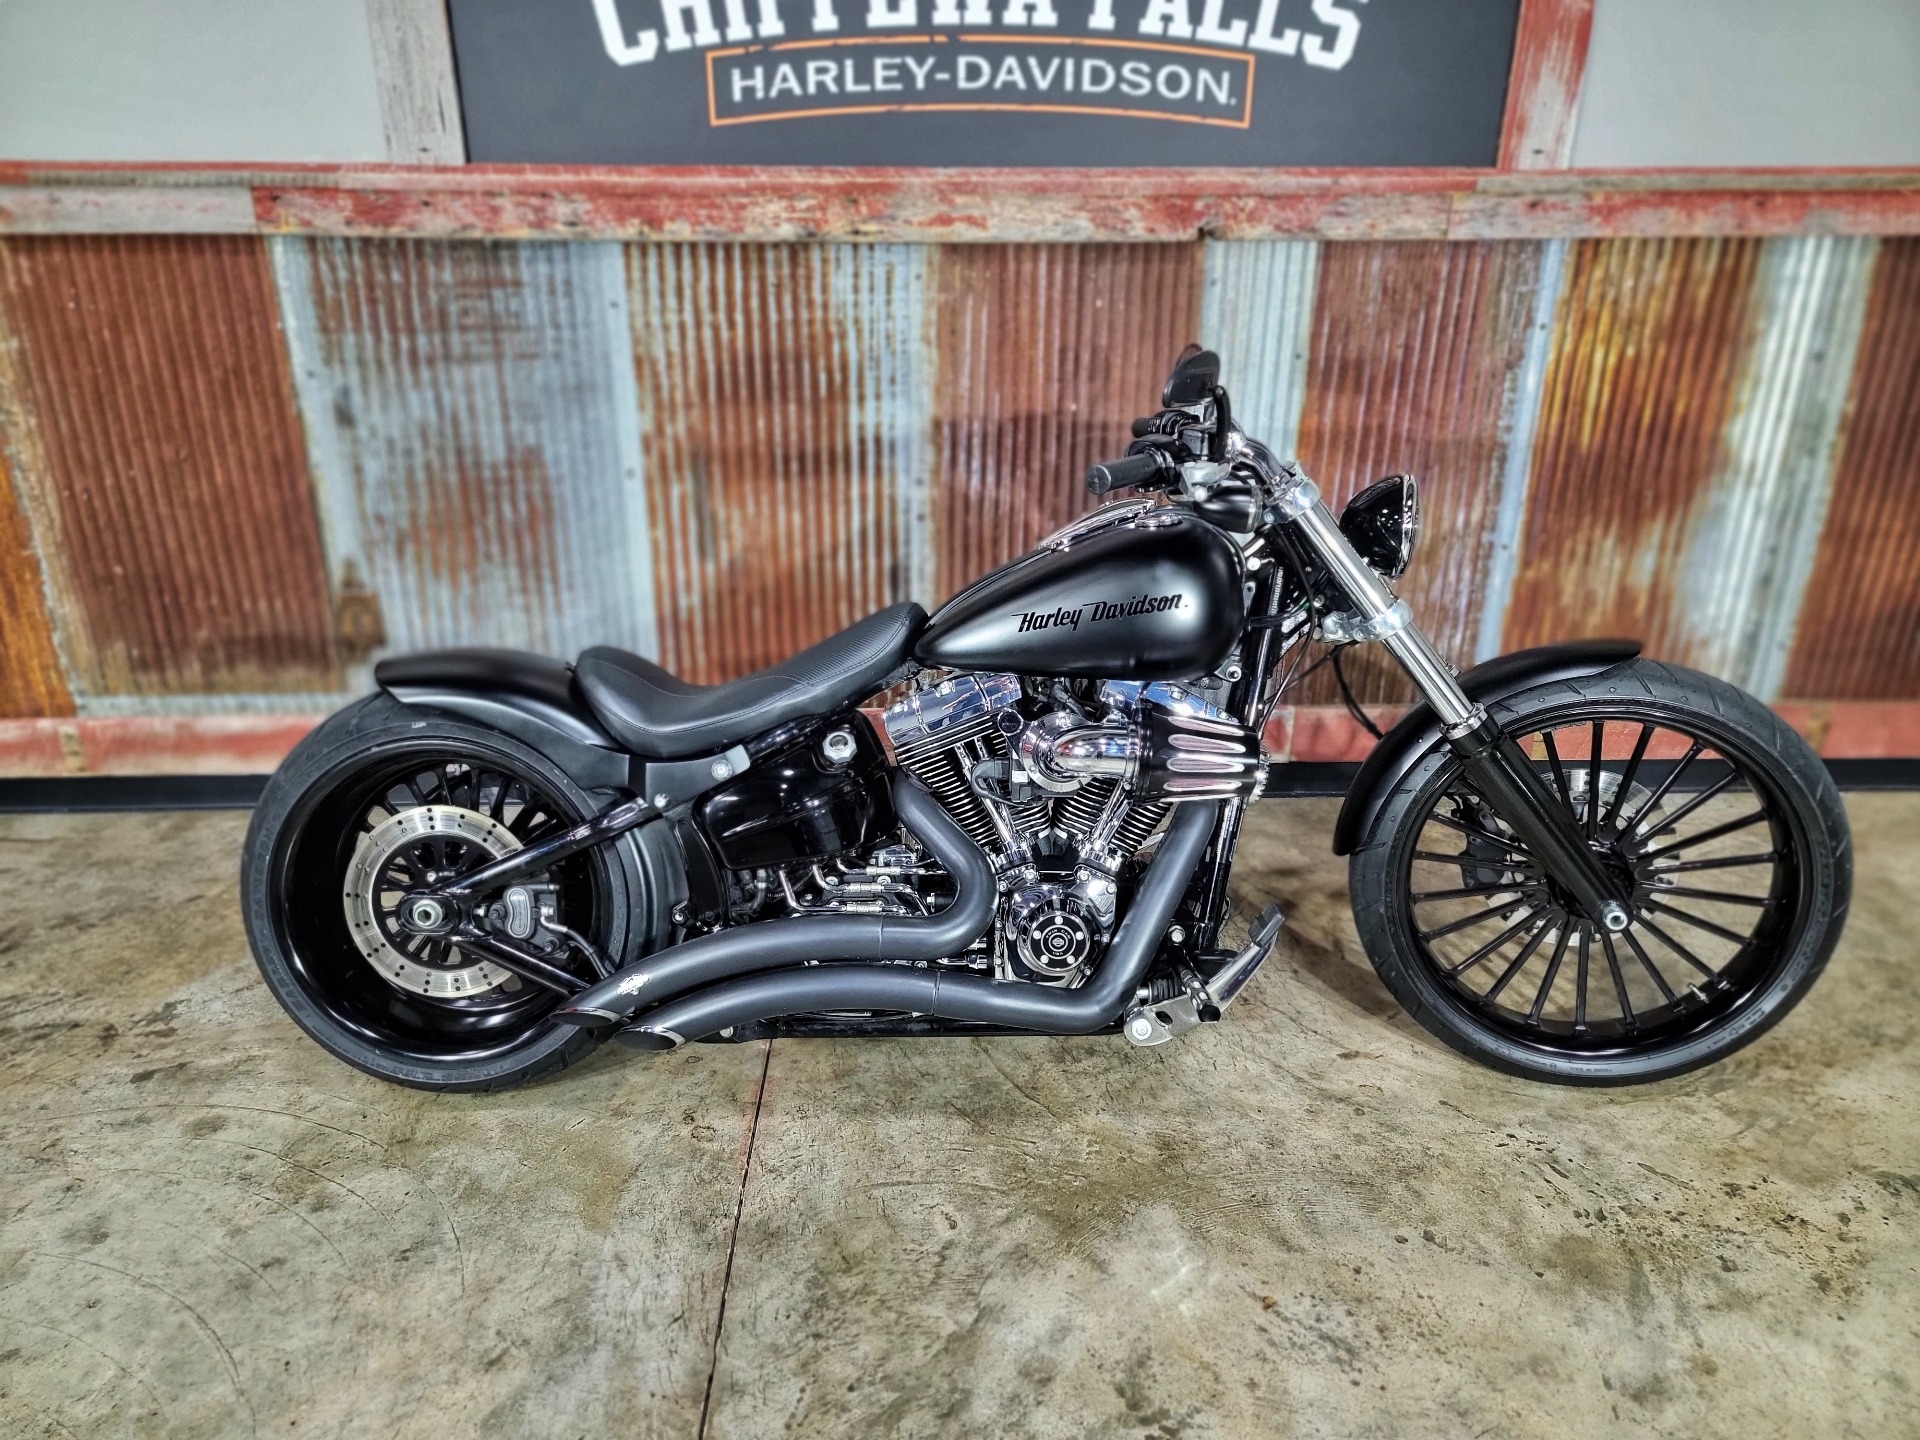 Used 2016 Harley Davidson Breakout Custom Motorcycles In Chippewa Falls Wi B0574